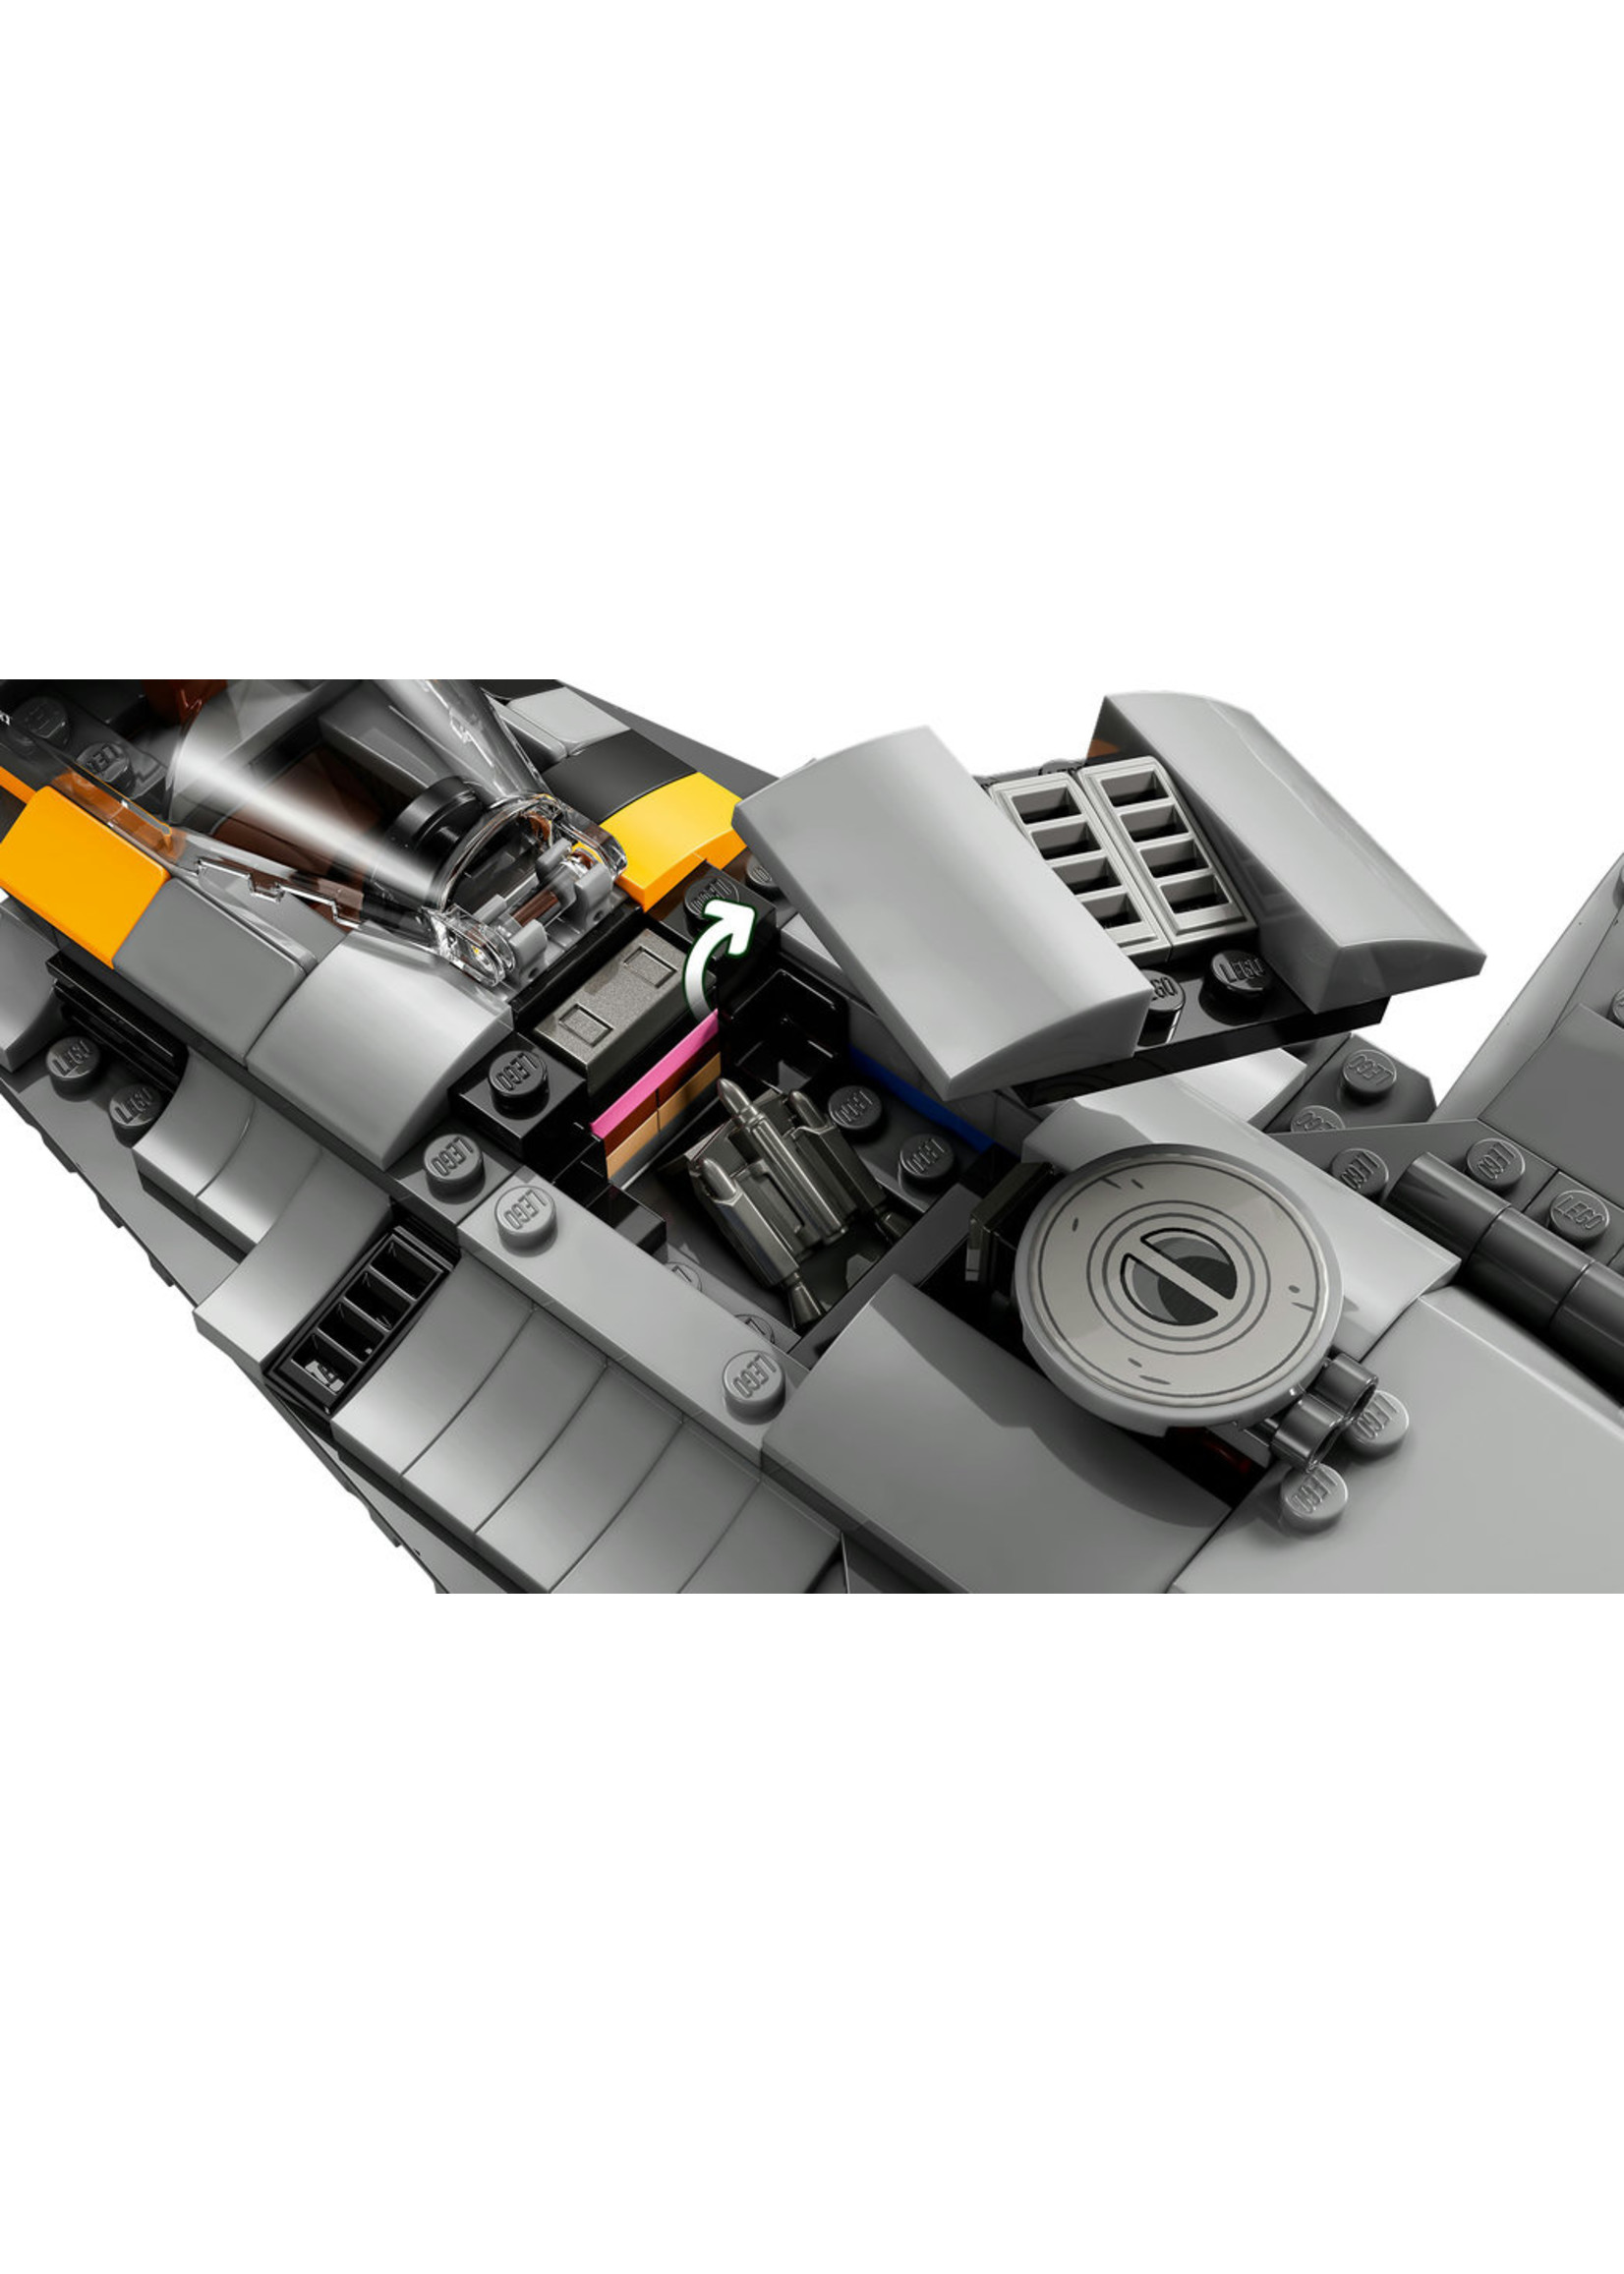 LEGO 75325 - The Mandalorian's N-1 Starfighter